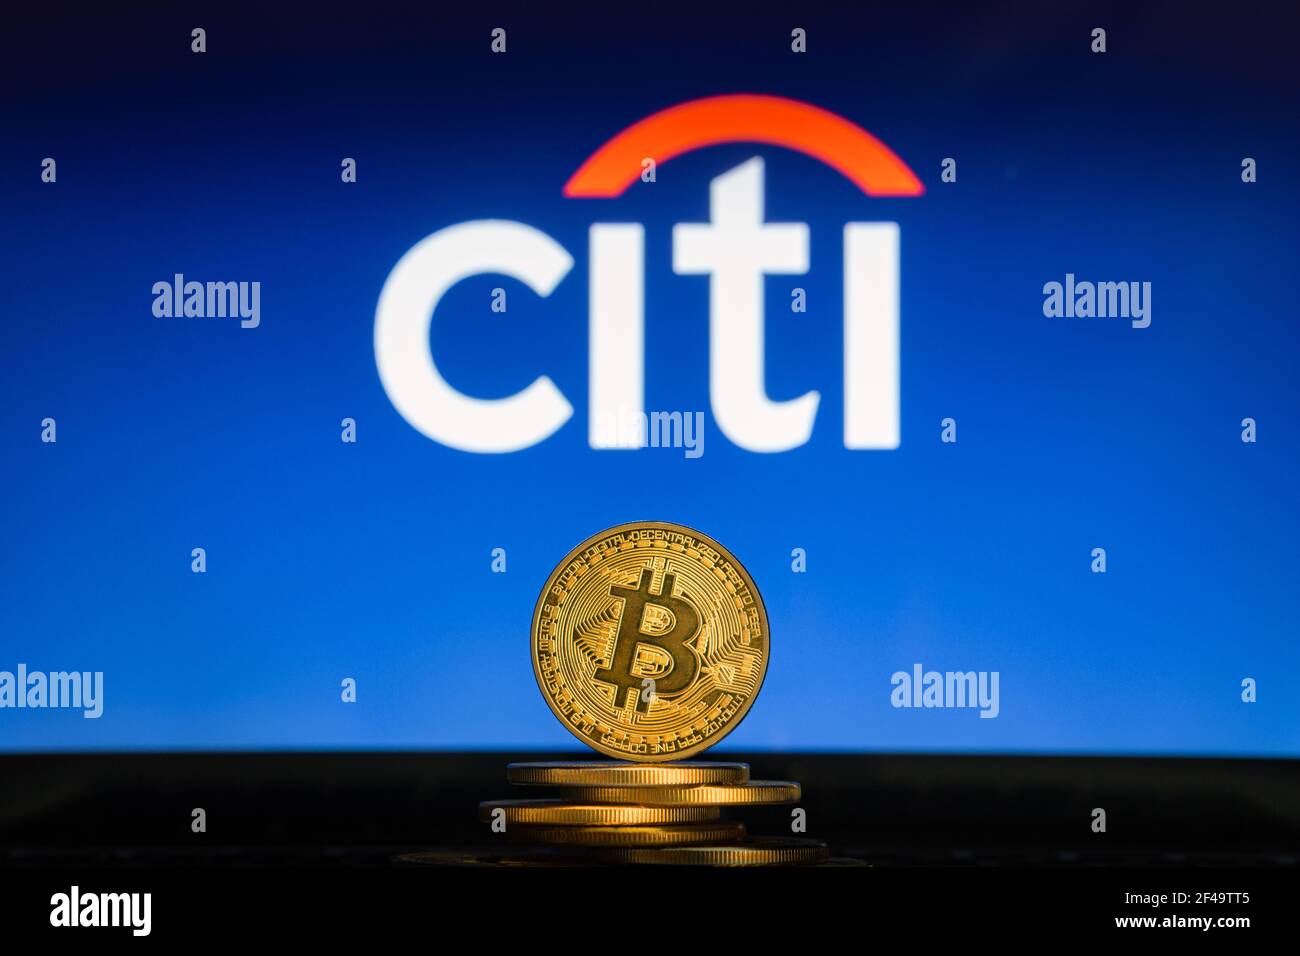 SLOVENIA, LJUBLJANA - 24 02 2019: Bitcoin on a stack of coins with Citi Bank logo on a laptop screen. Stock Photo